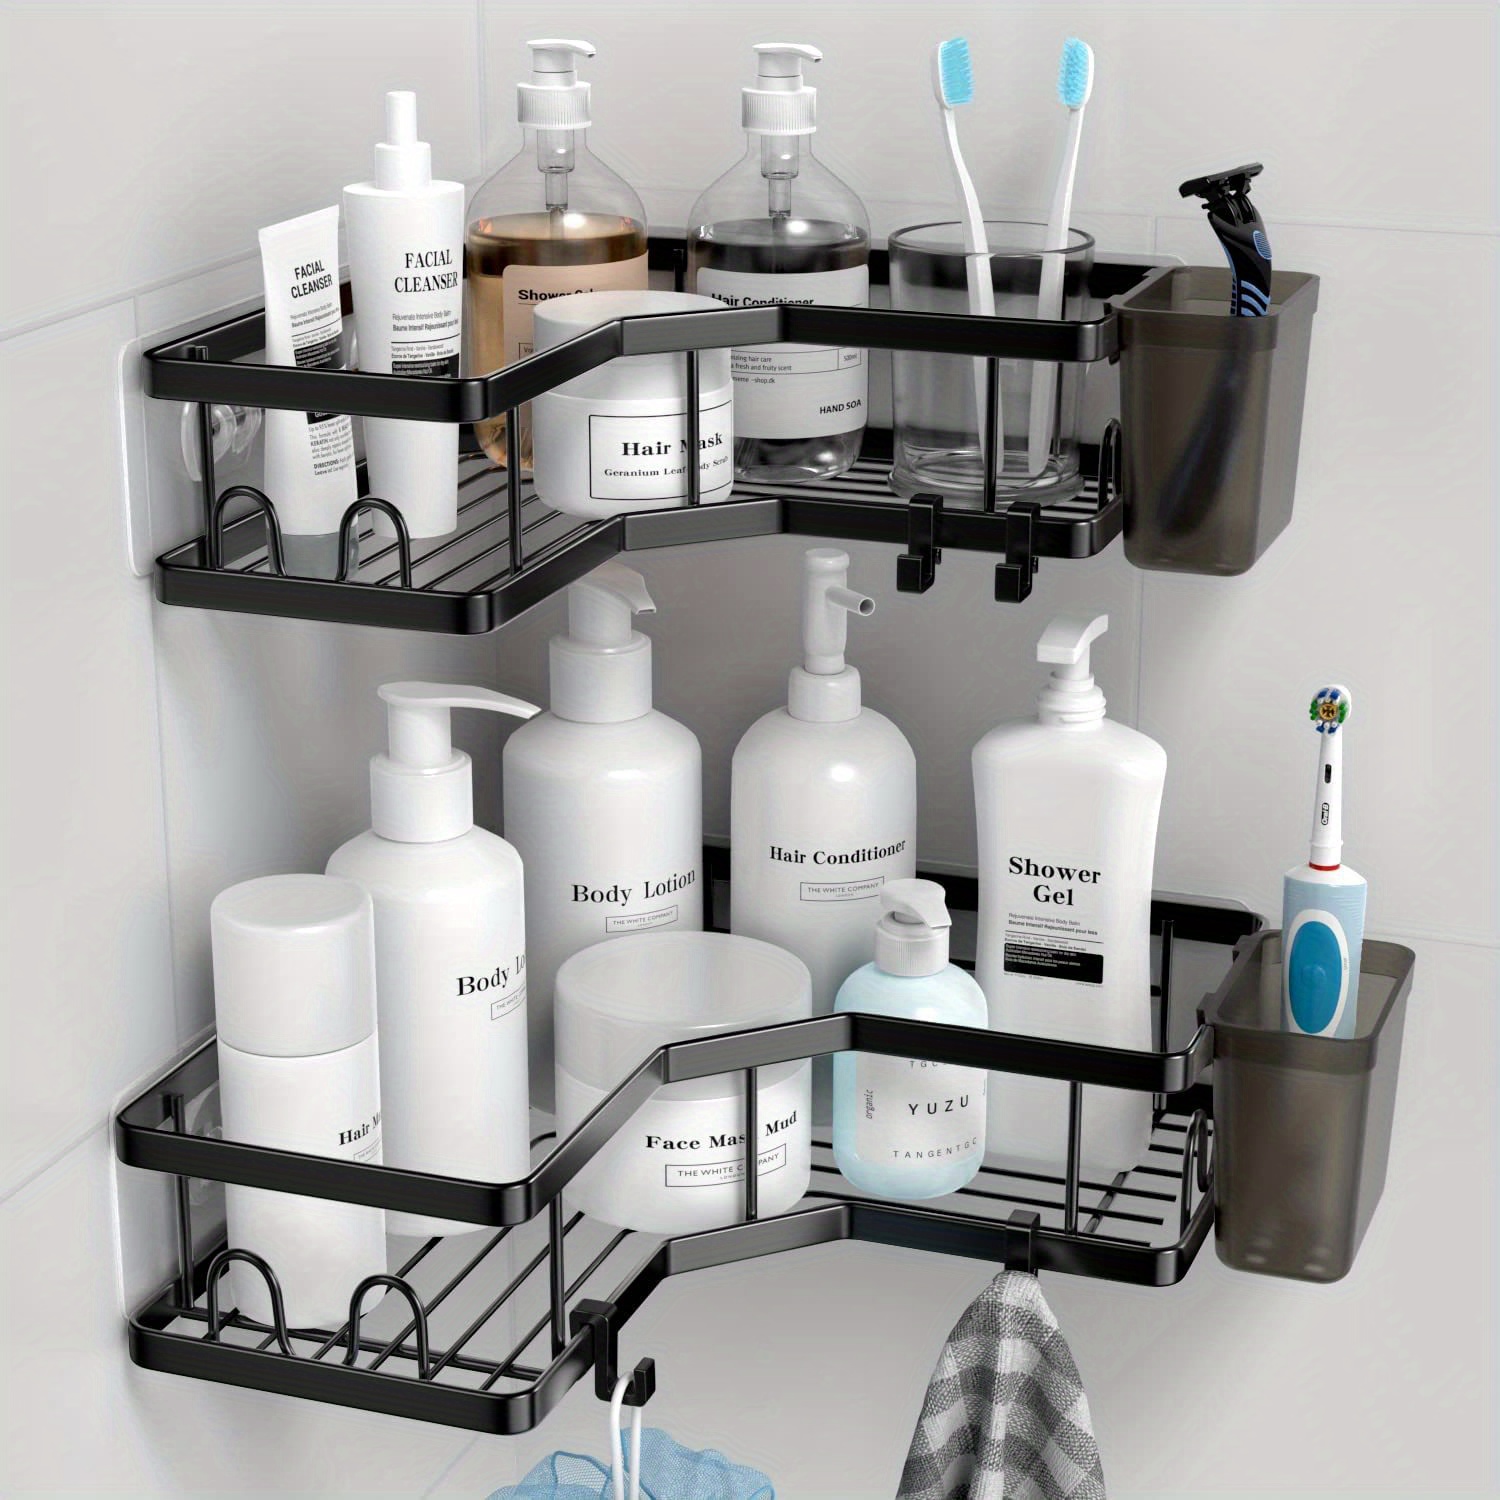 Rebrilliant Shower Caddy Shelf Organizer Rack: Self Adhesive Black Bathroom Shelves - Rustproof No-Drilling Stainless Steel Shower Storage for Inside Shower Rebri